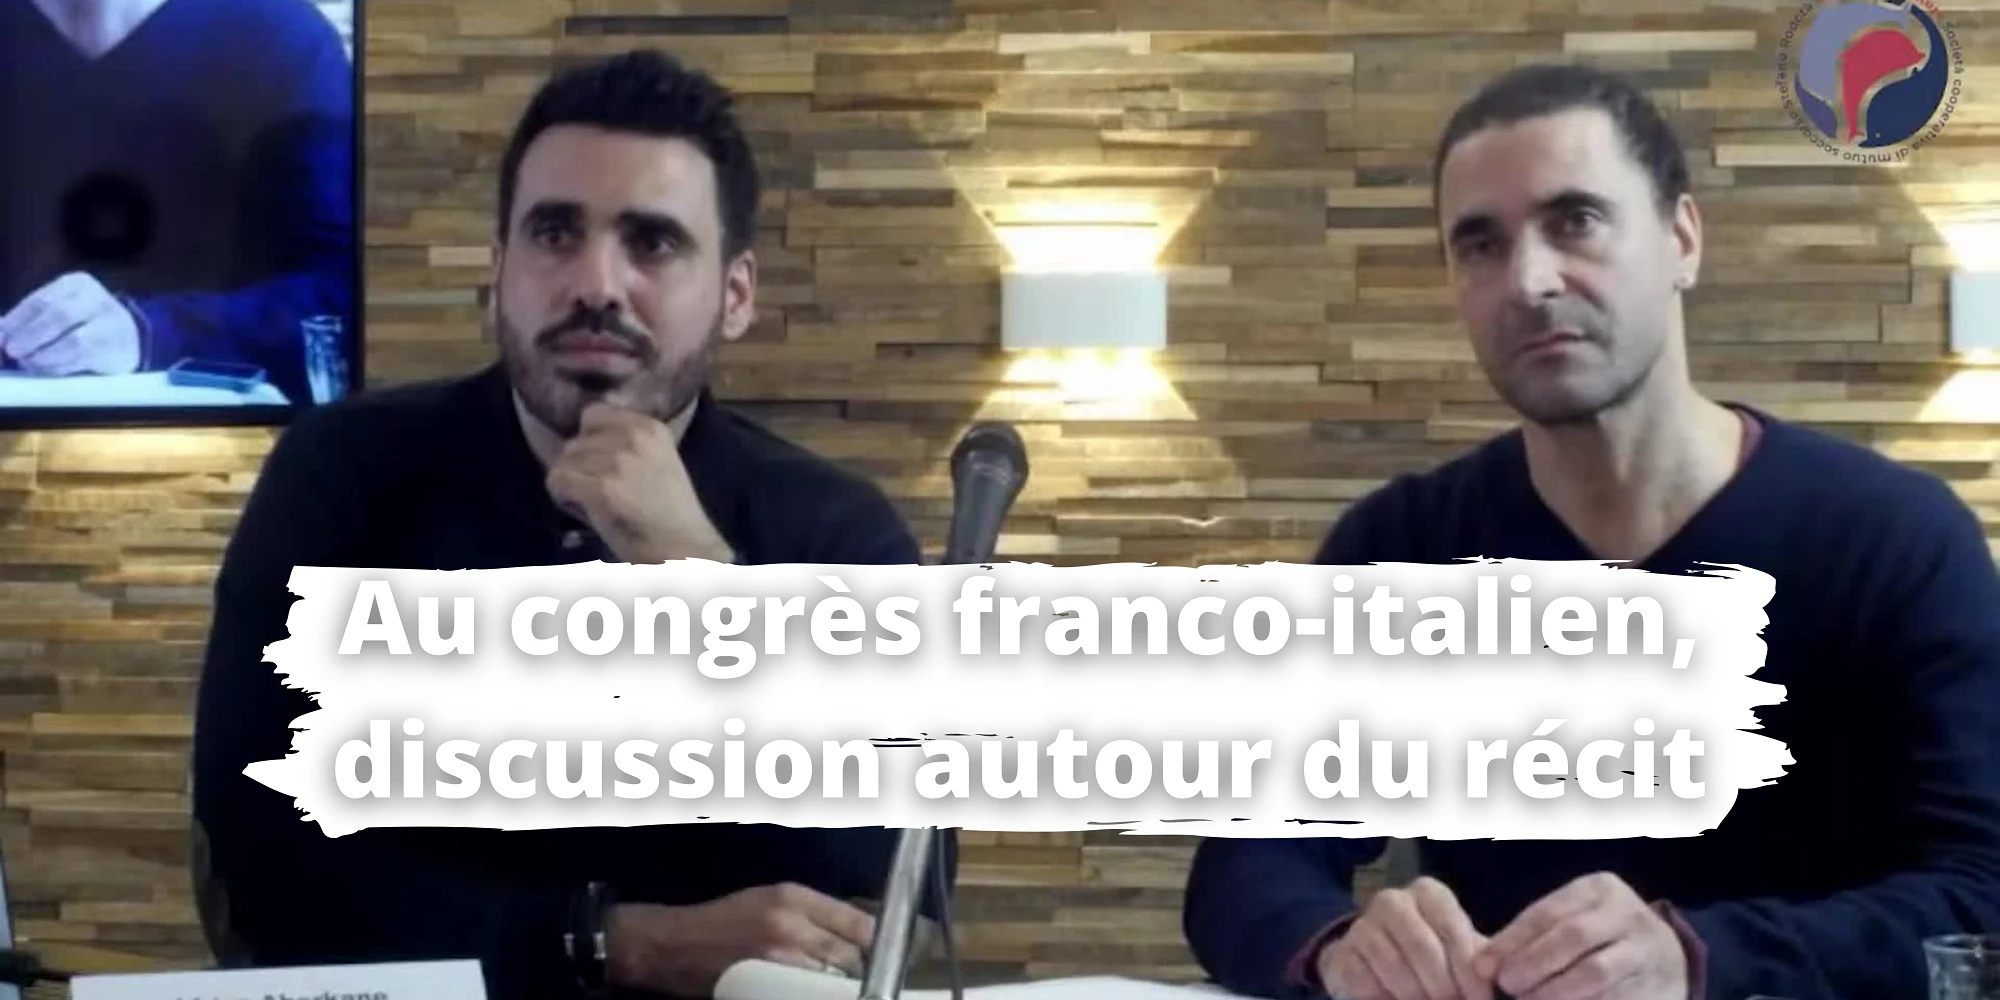 Débat autour du narratif lors du congrès franco-italien avec Idriss Aberkane, Xavier Azalbert, etc.